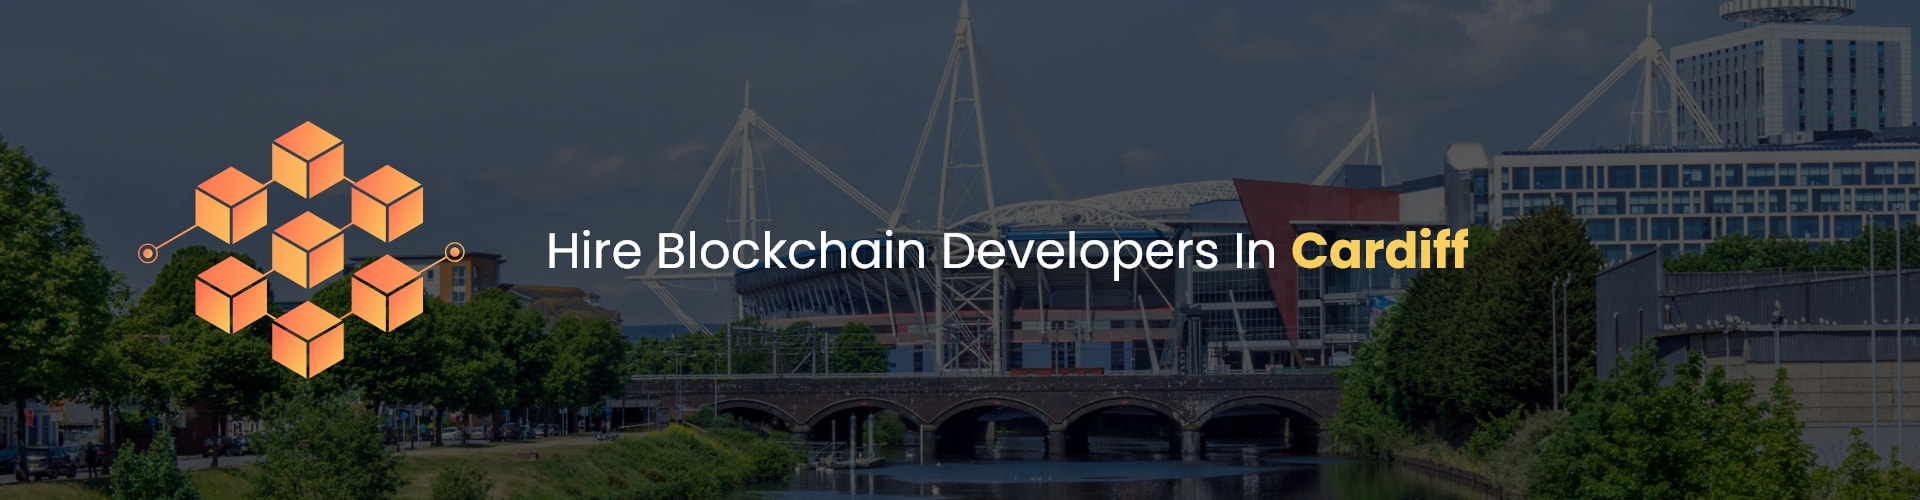 hire blockchain developers in cardiff